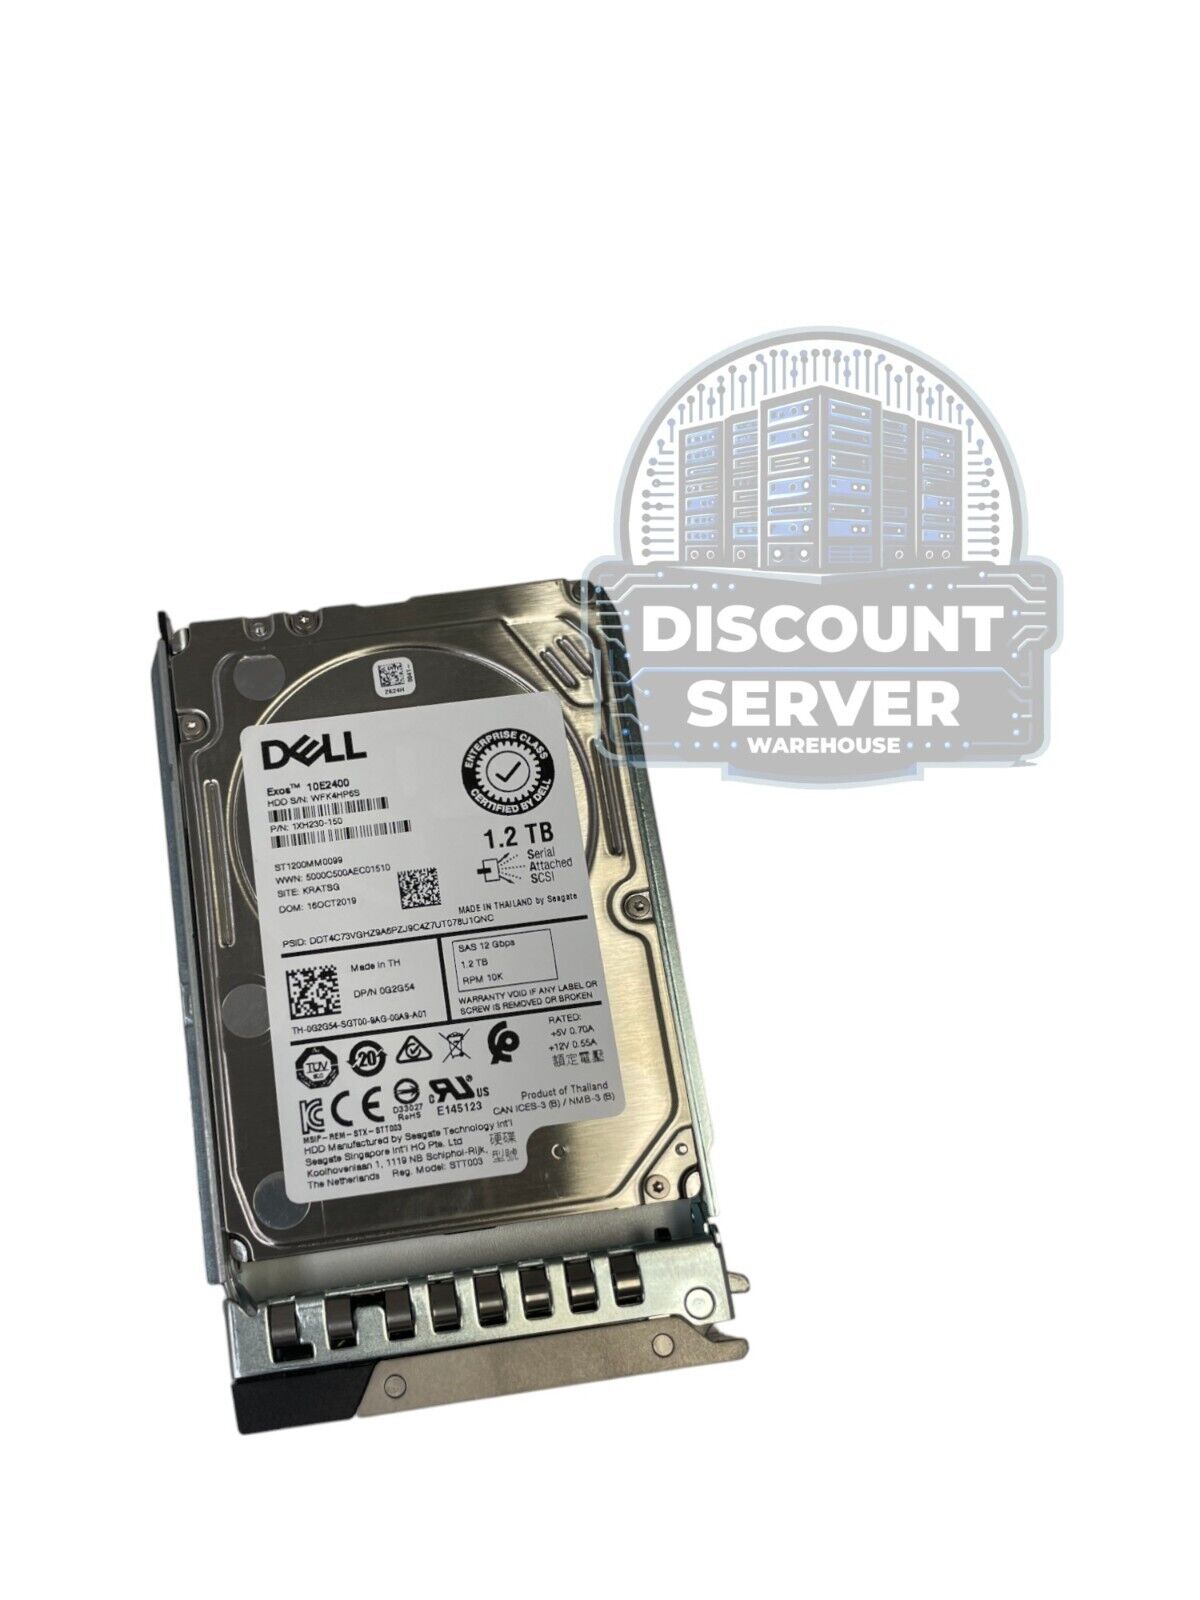 Dell 1.2TB 10k 12G SAS 512n 2.5in HDD ST1200MM0099 G2G54